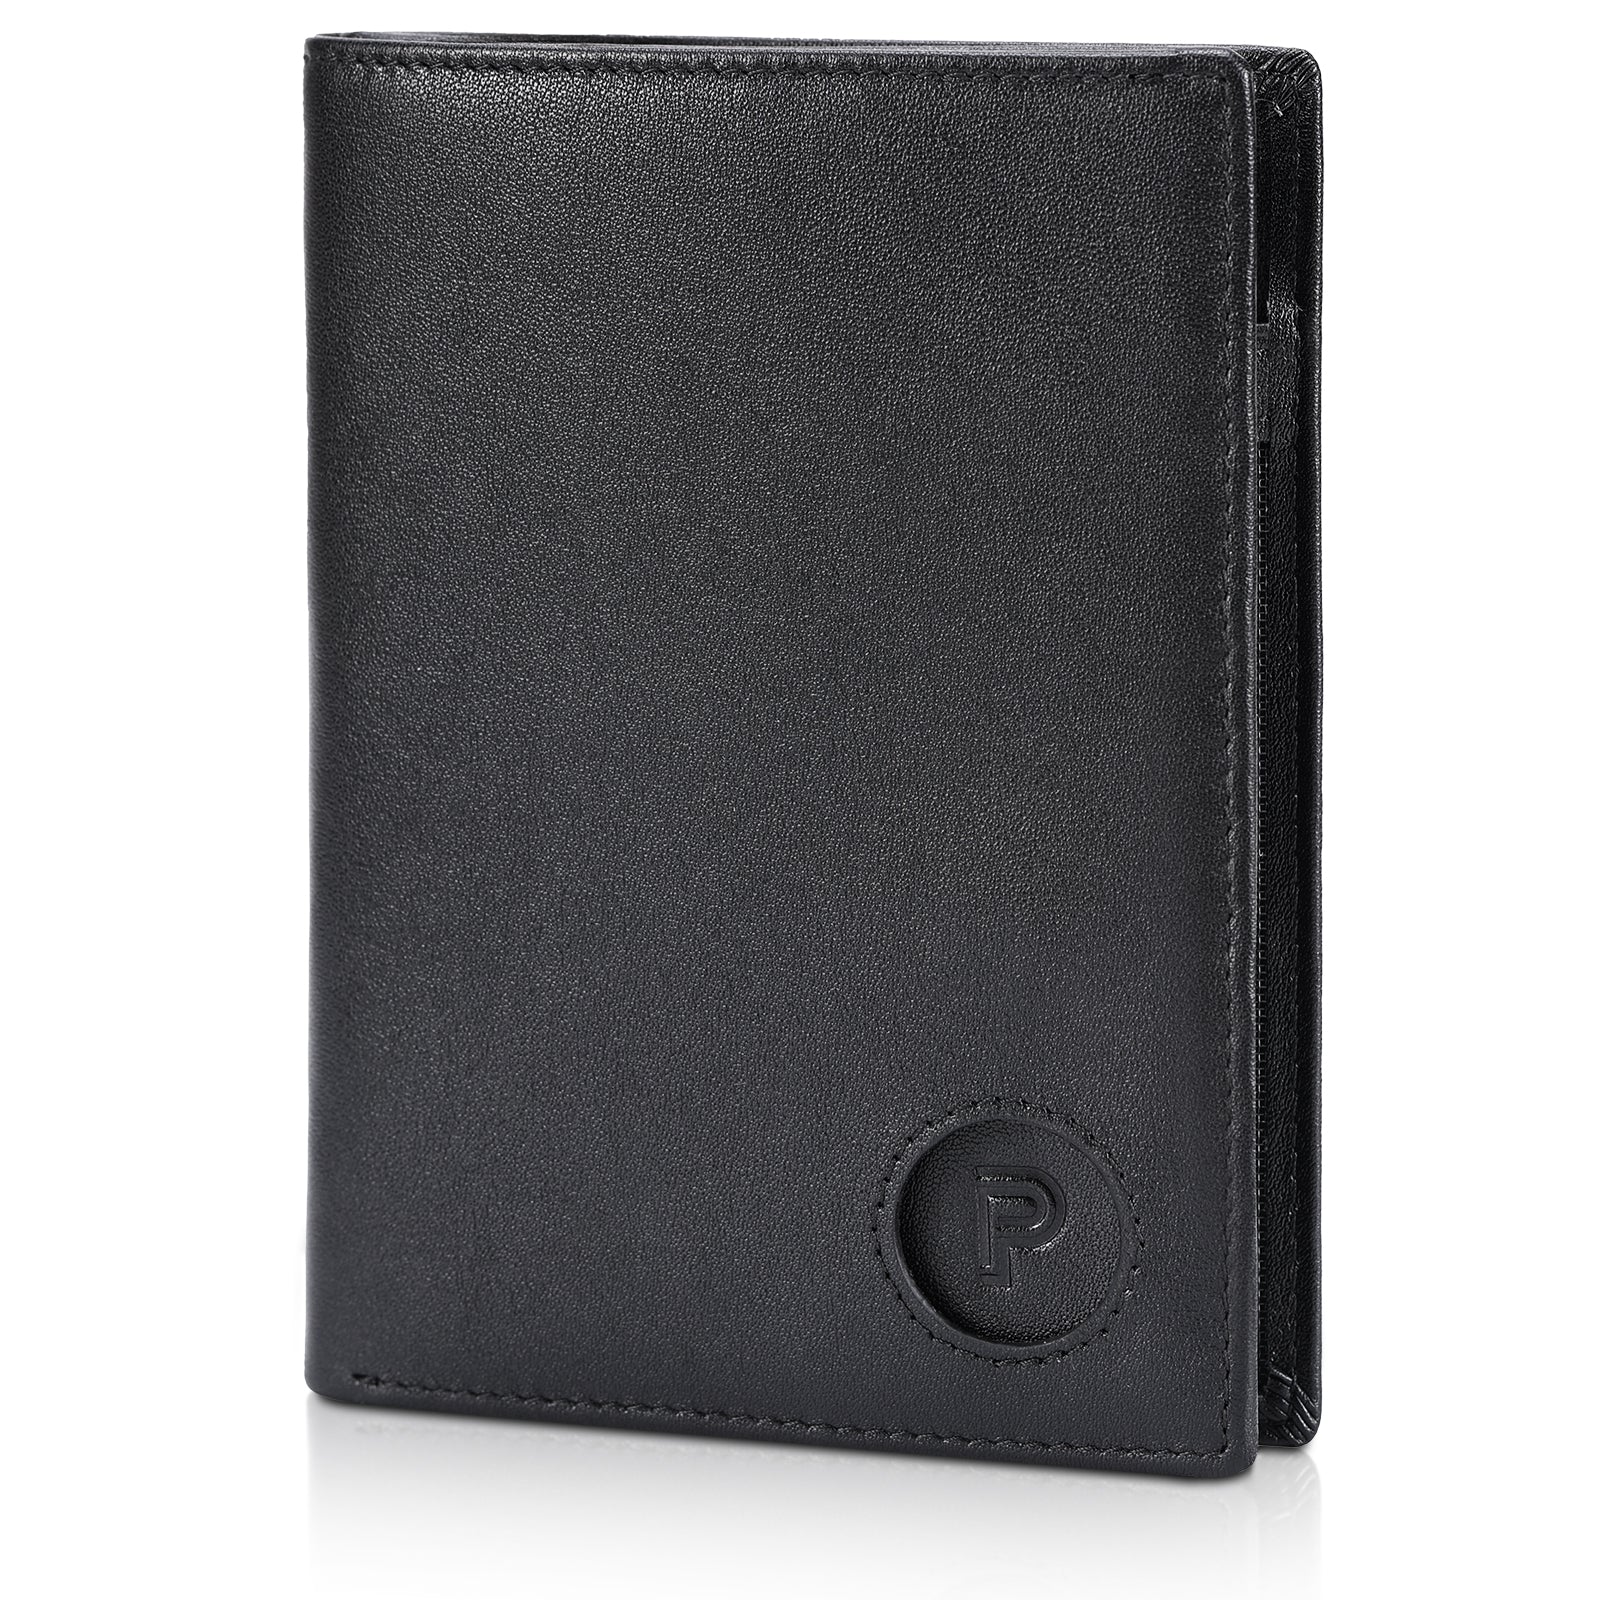 Luxury RFID Blocking Leather Passport Holder Travel Wallet with AirTag Slot (Black)